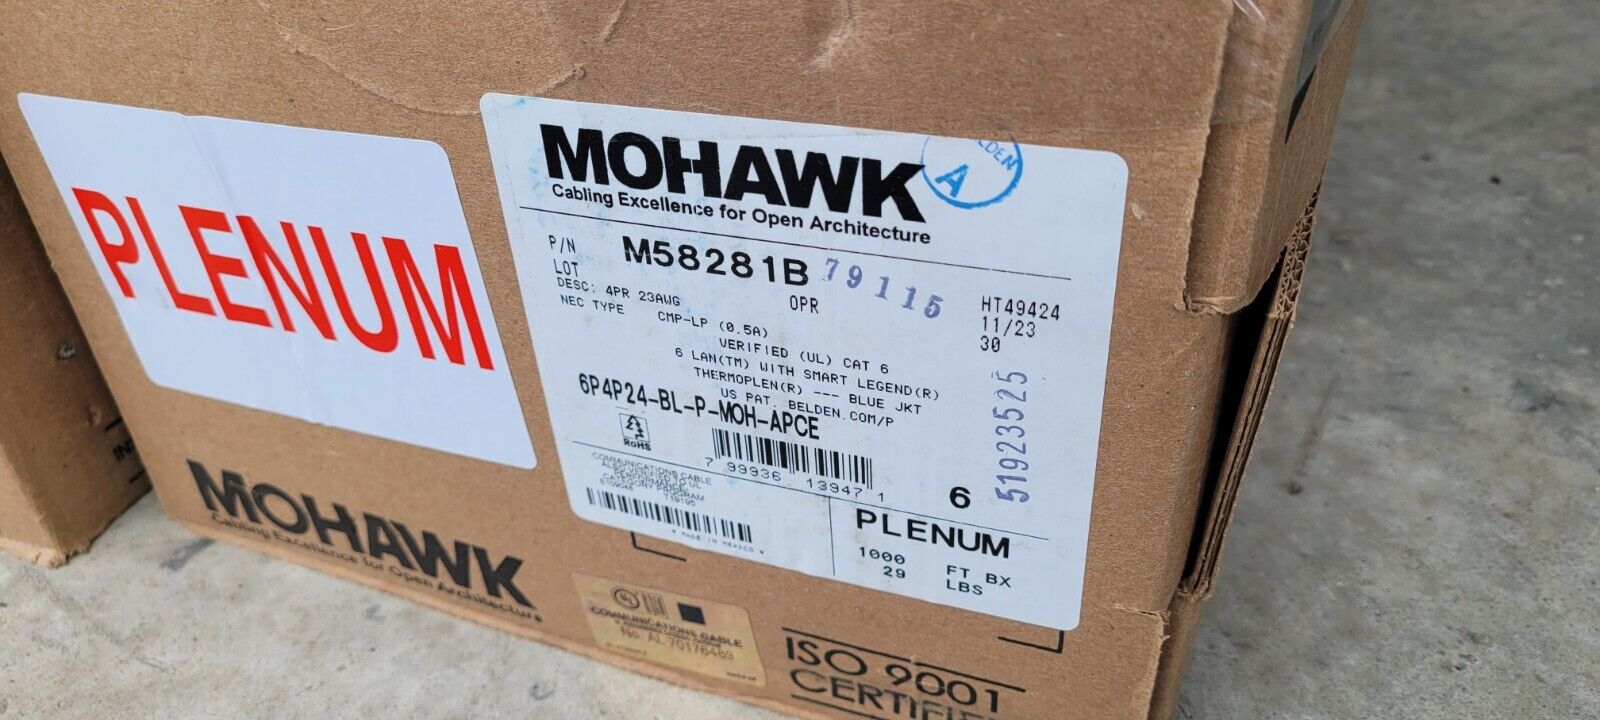 Mohawk CAT6 Plenum Blue 1000' M58281B 6P4P24-BL-P-MOH-APOE CAT 6